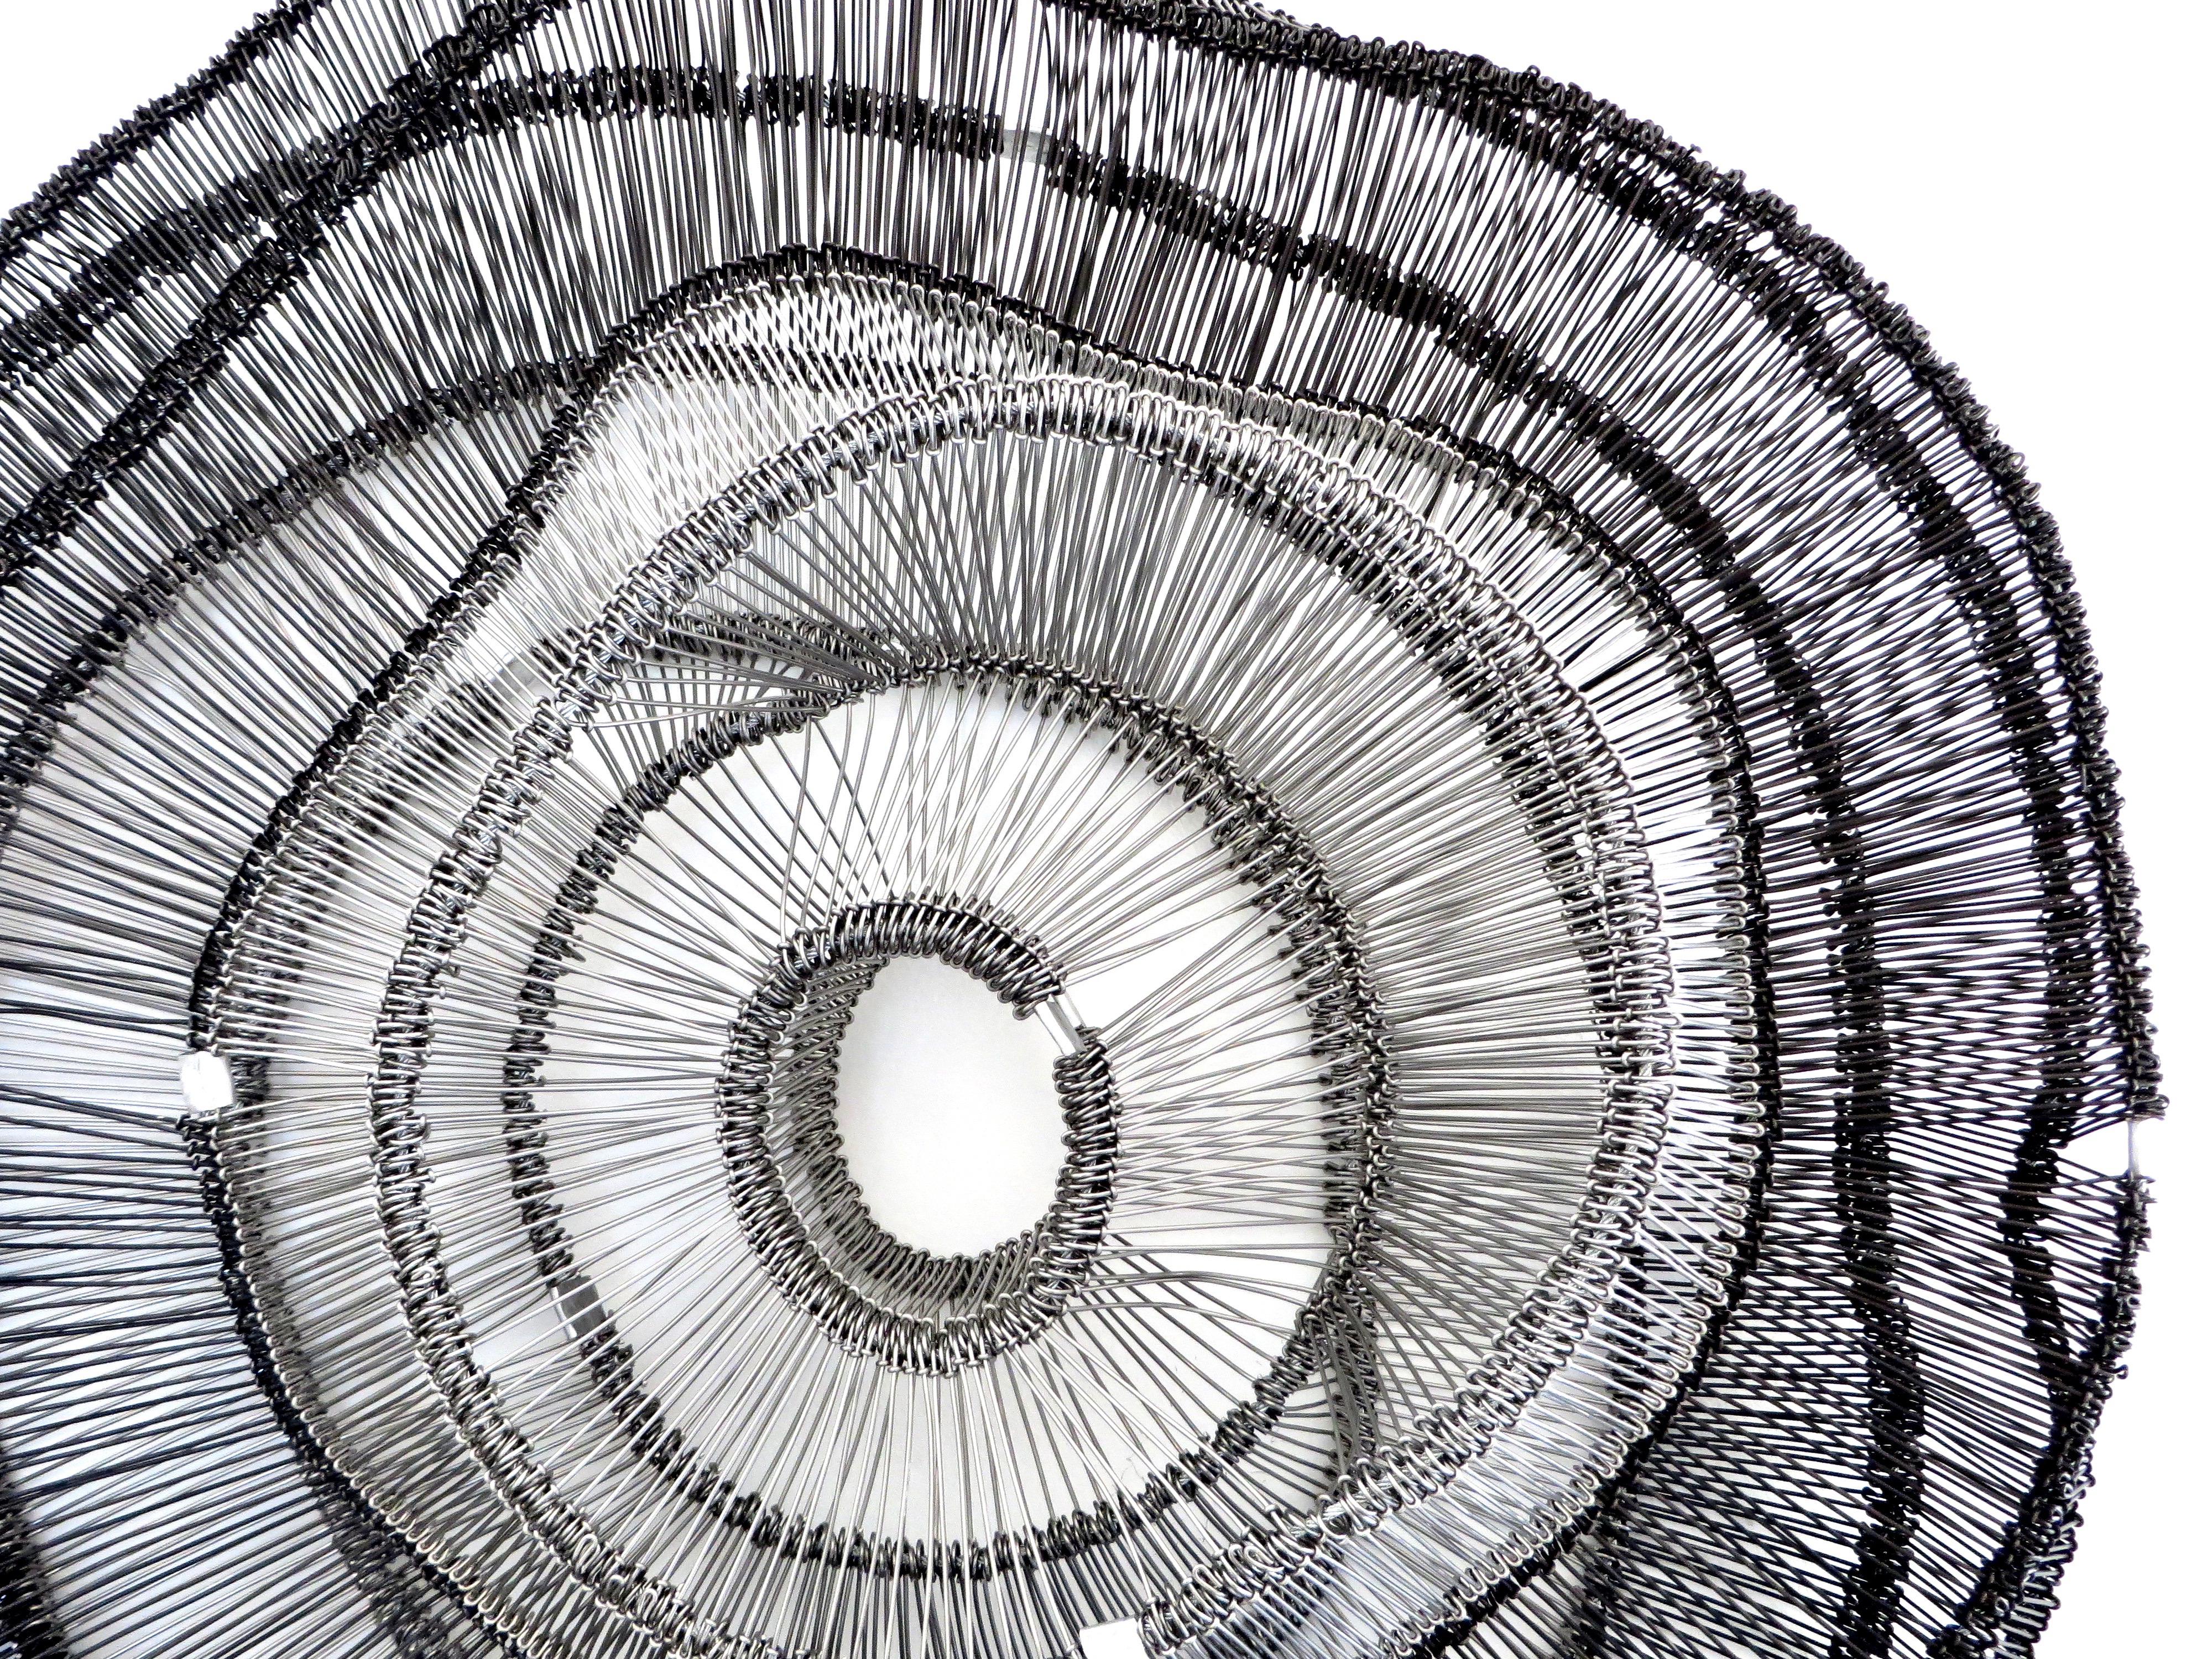 Artist Eric Gushee Emergence Series Woven Wire Wall Sculpture 2